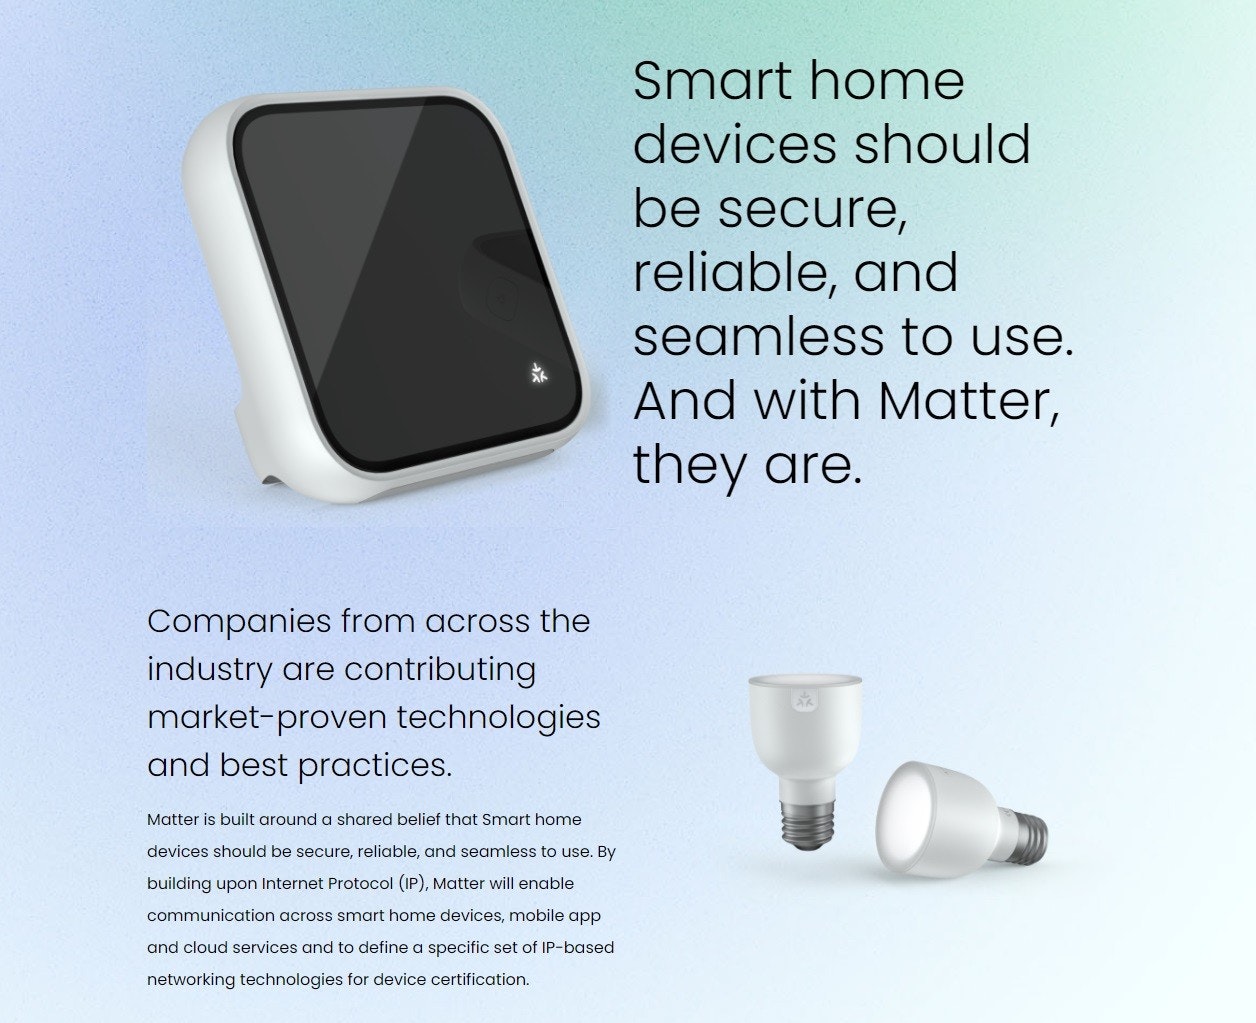 照片中提到了Smart home、devices should、be secure,，包含了產品設計、產品、牌、儀表、字形